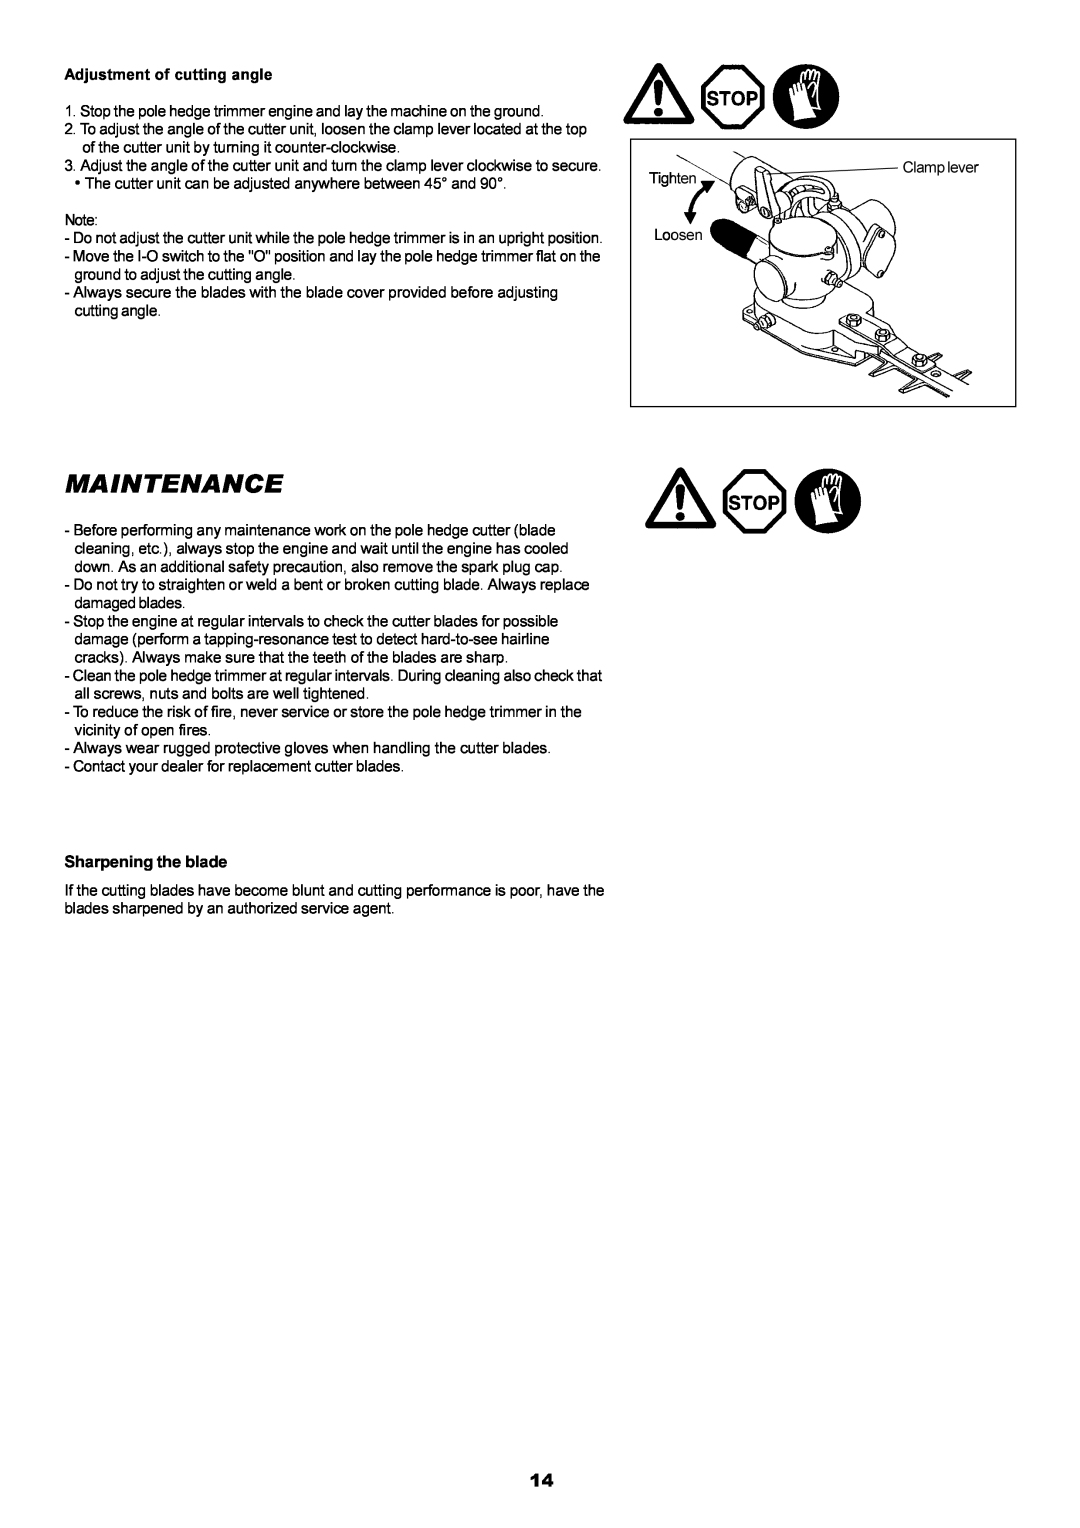 Dolmar MH-2556 instruction manual Maintenance, Sharpening the blade 